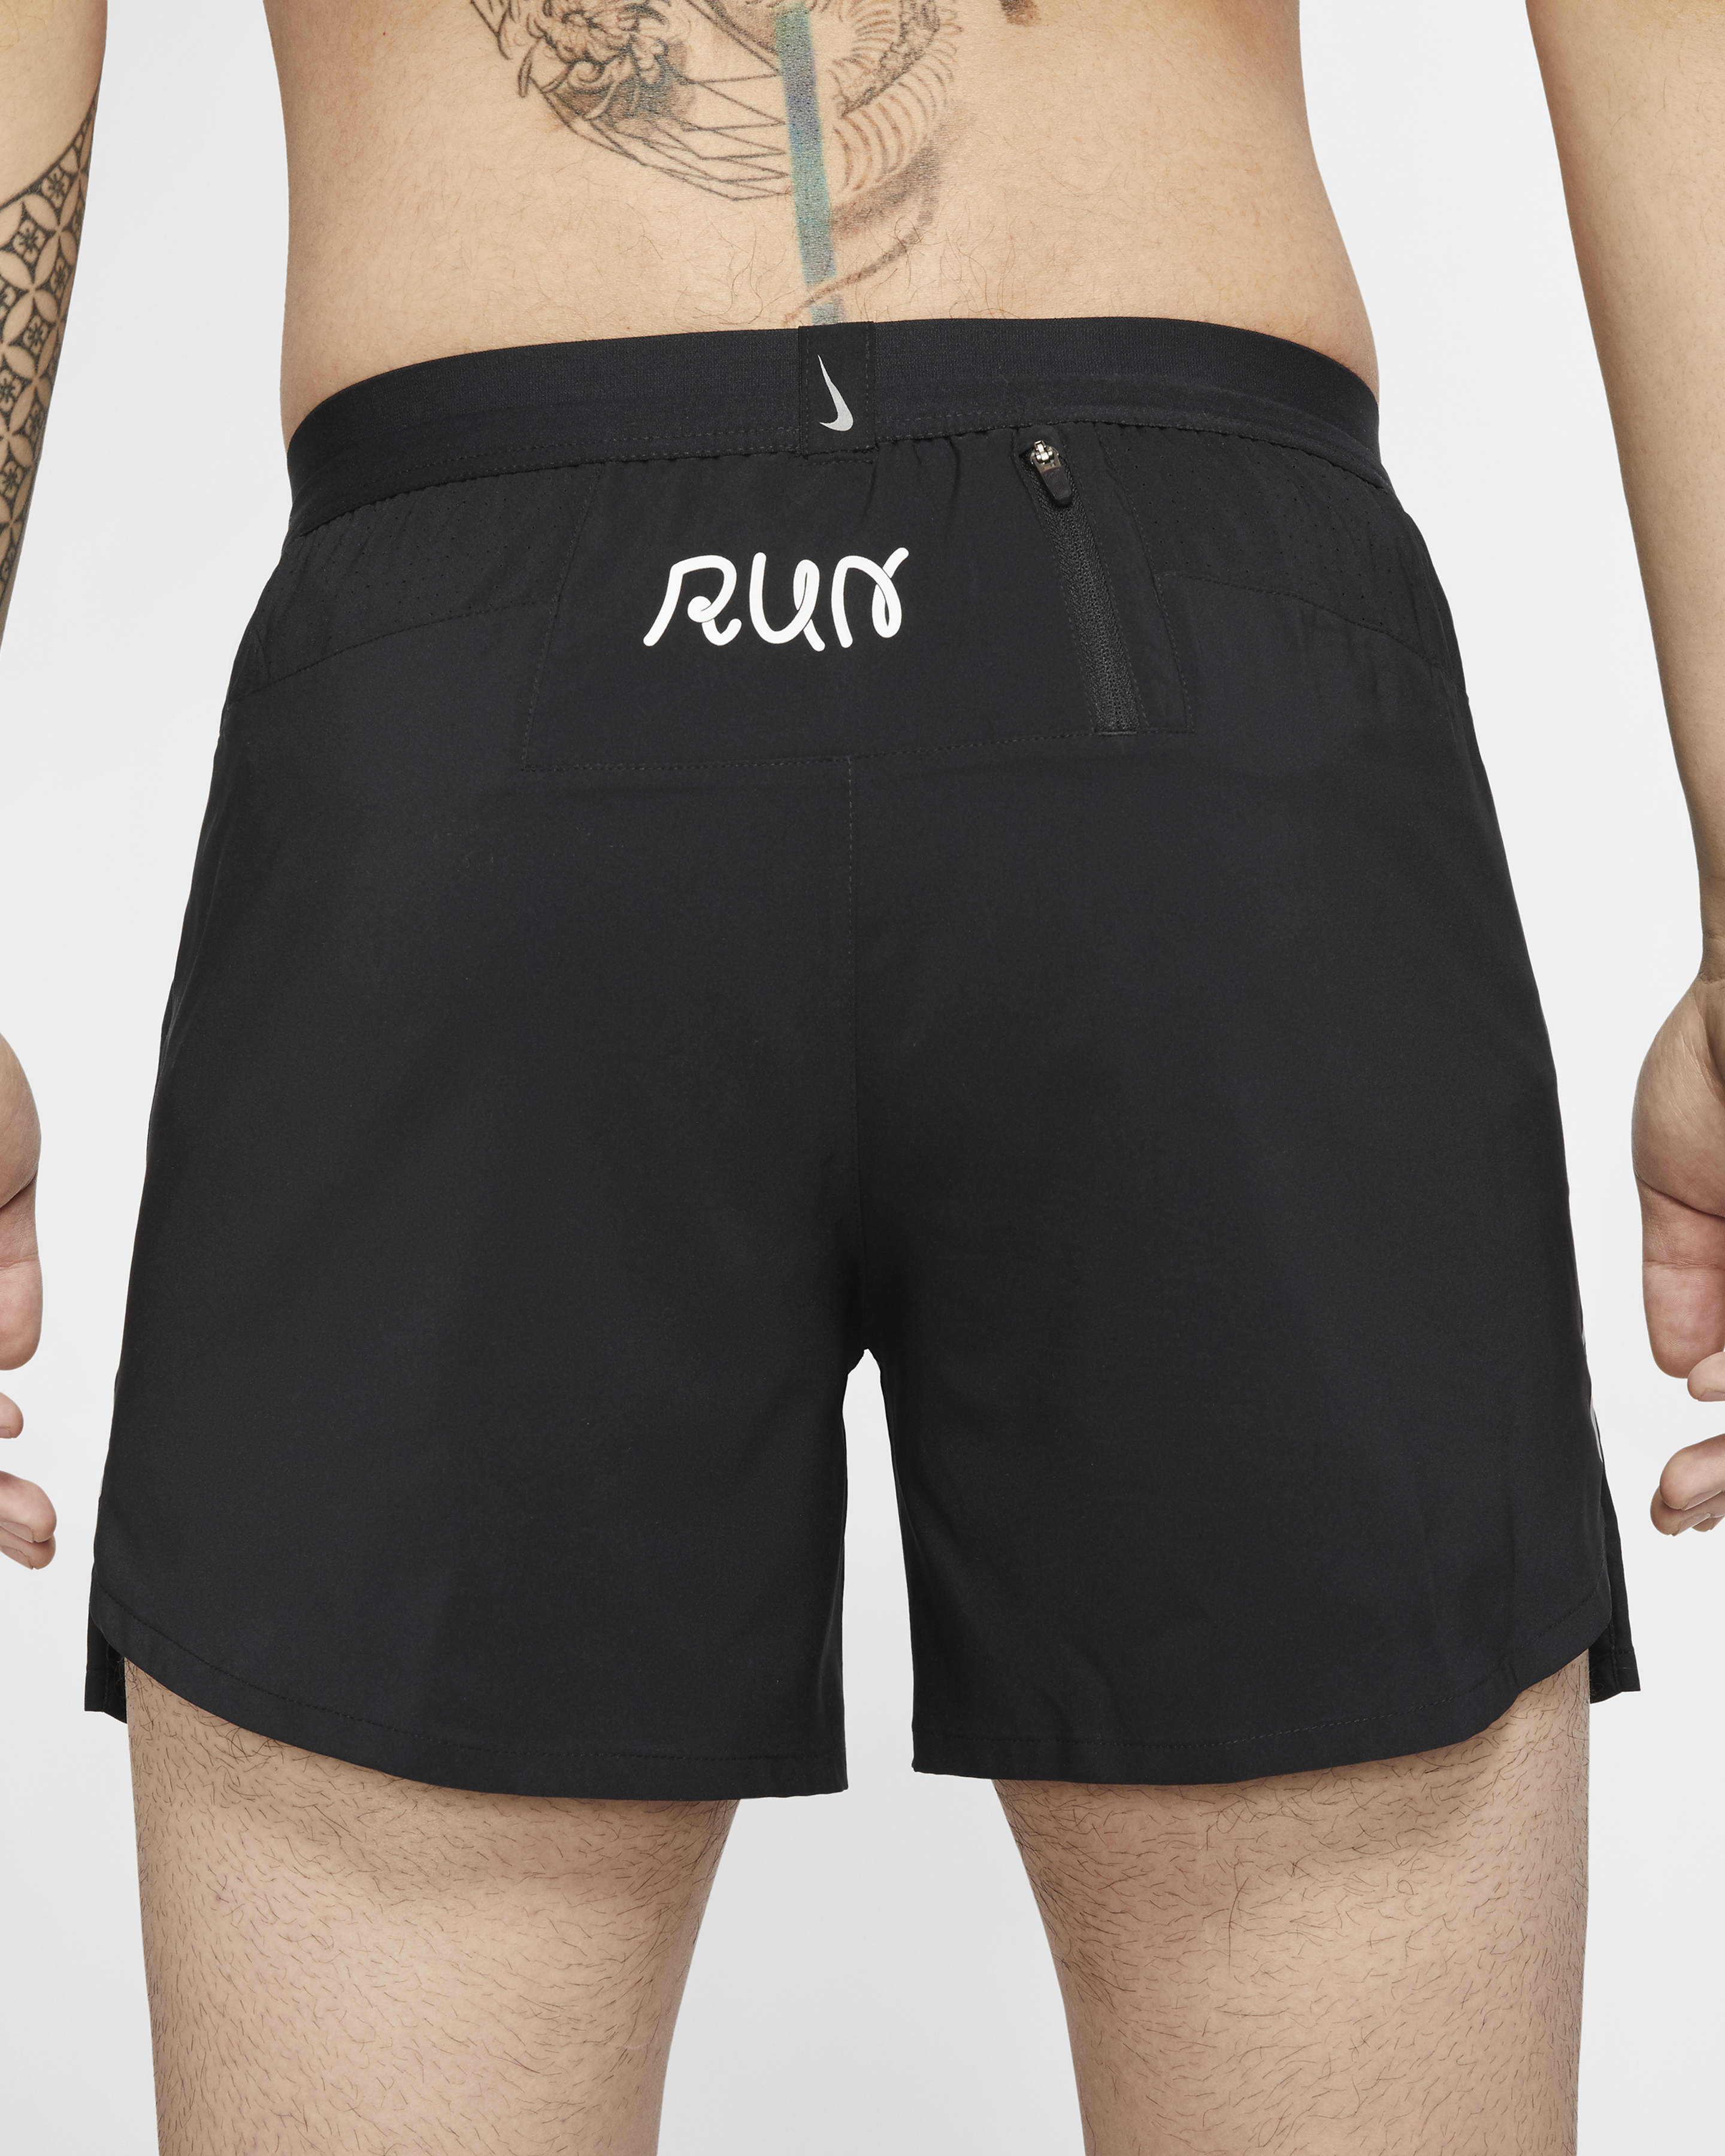 Neleus Men's 7 inch Running Shorts Lightweight Workout Shorts with Pockets